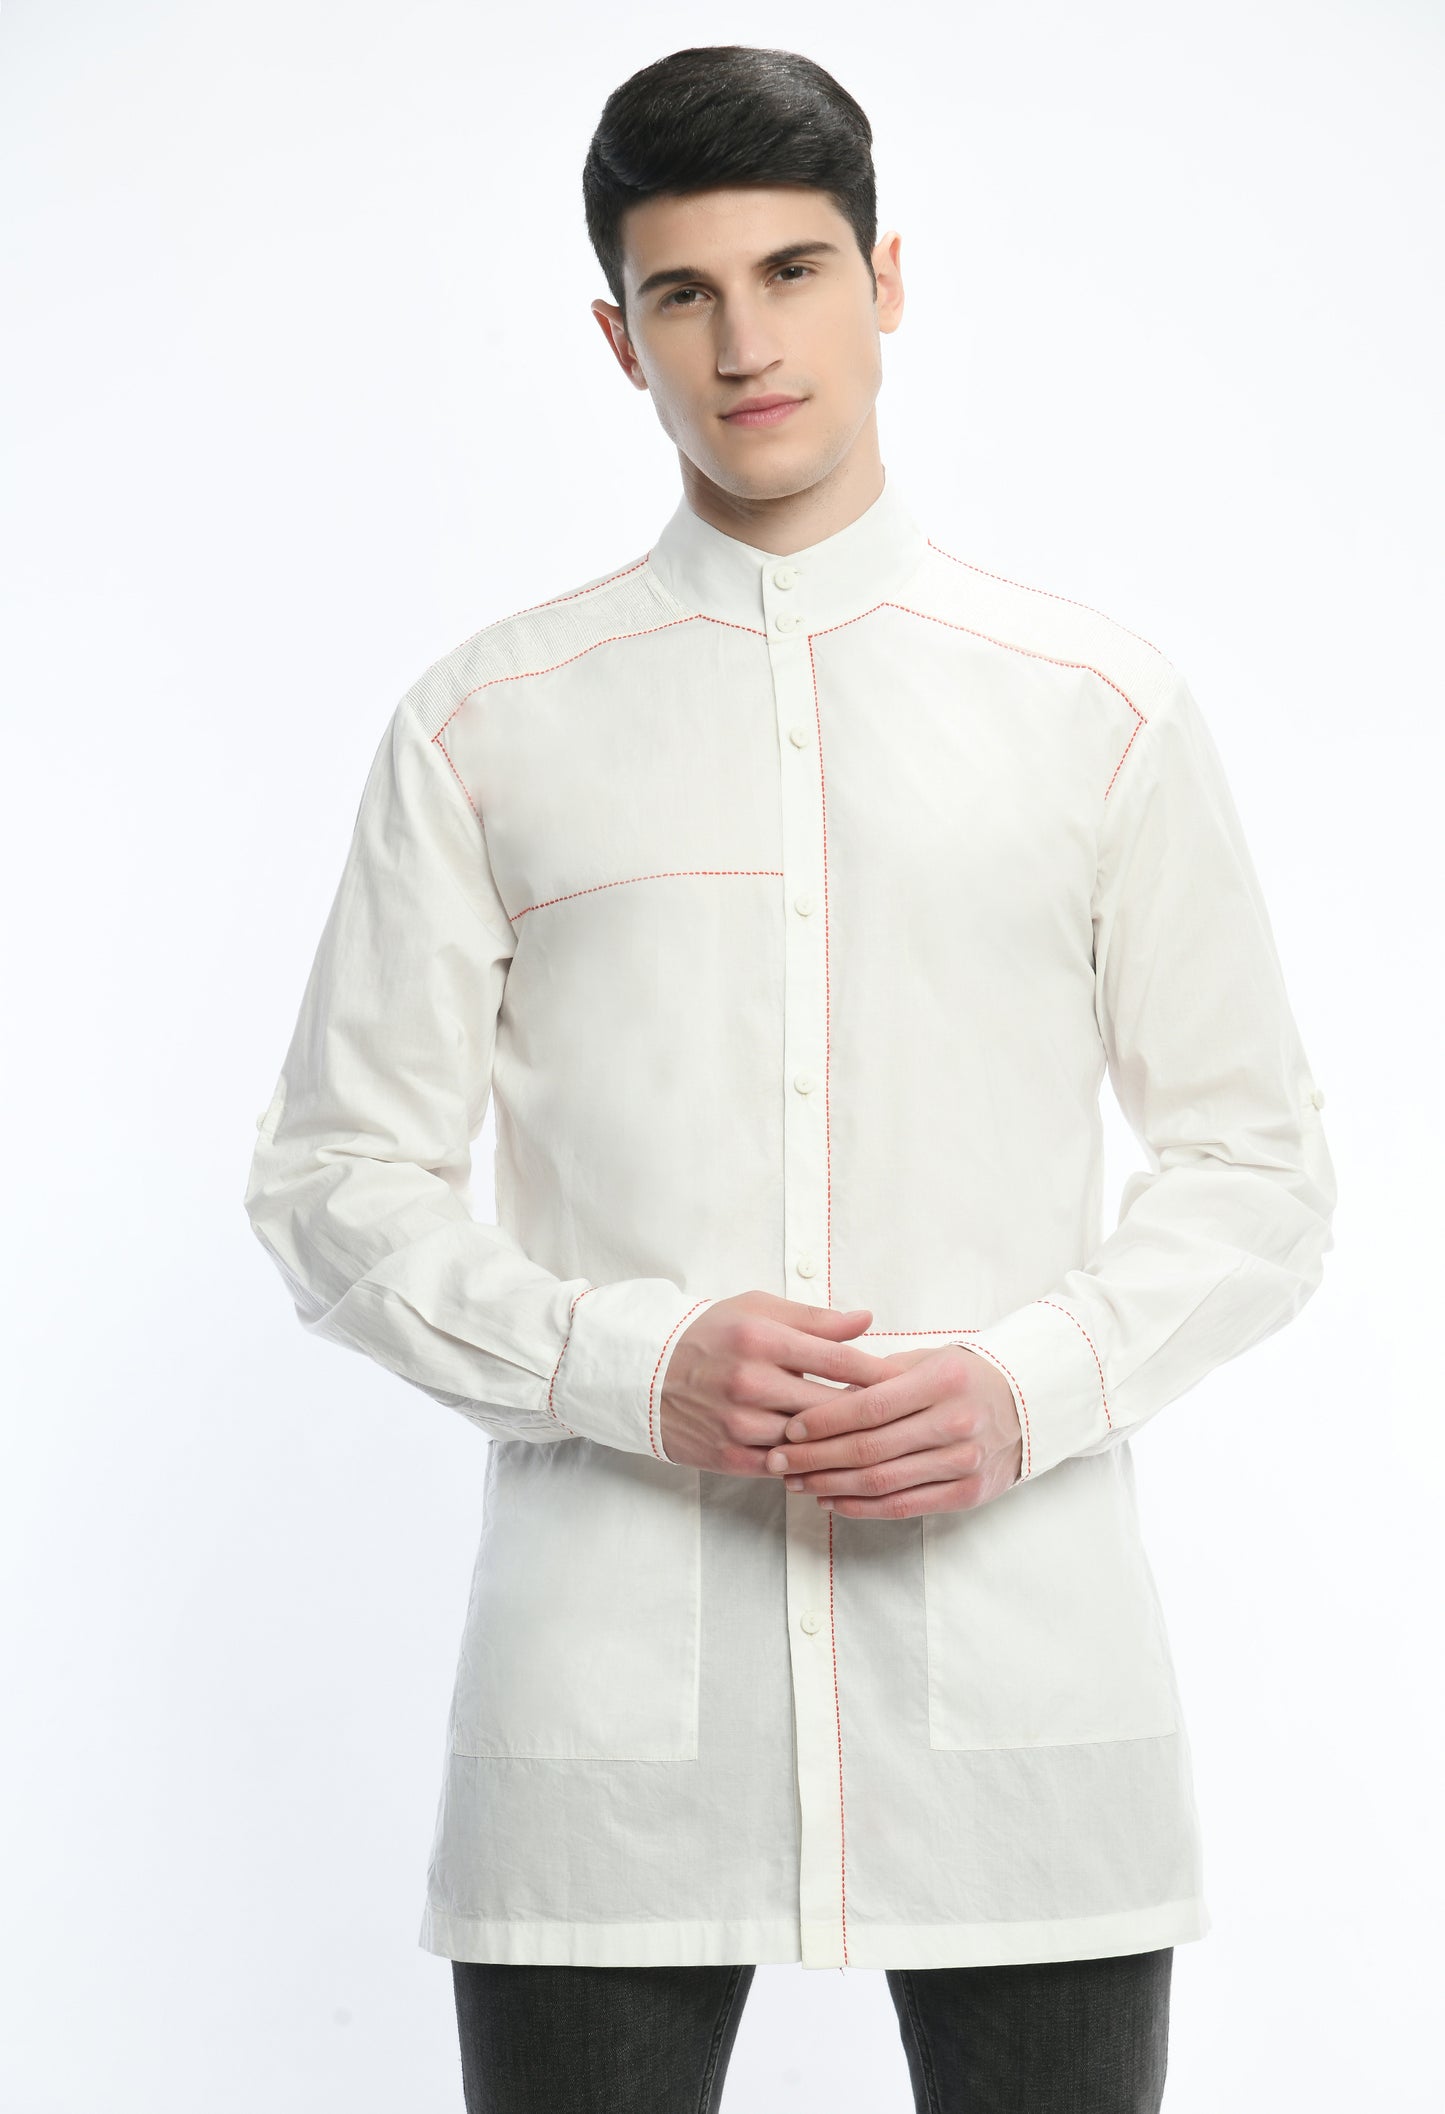 A white cotton shirt with Kantha thread work